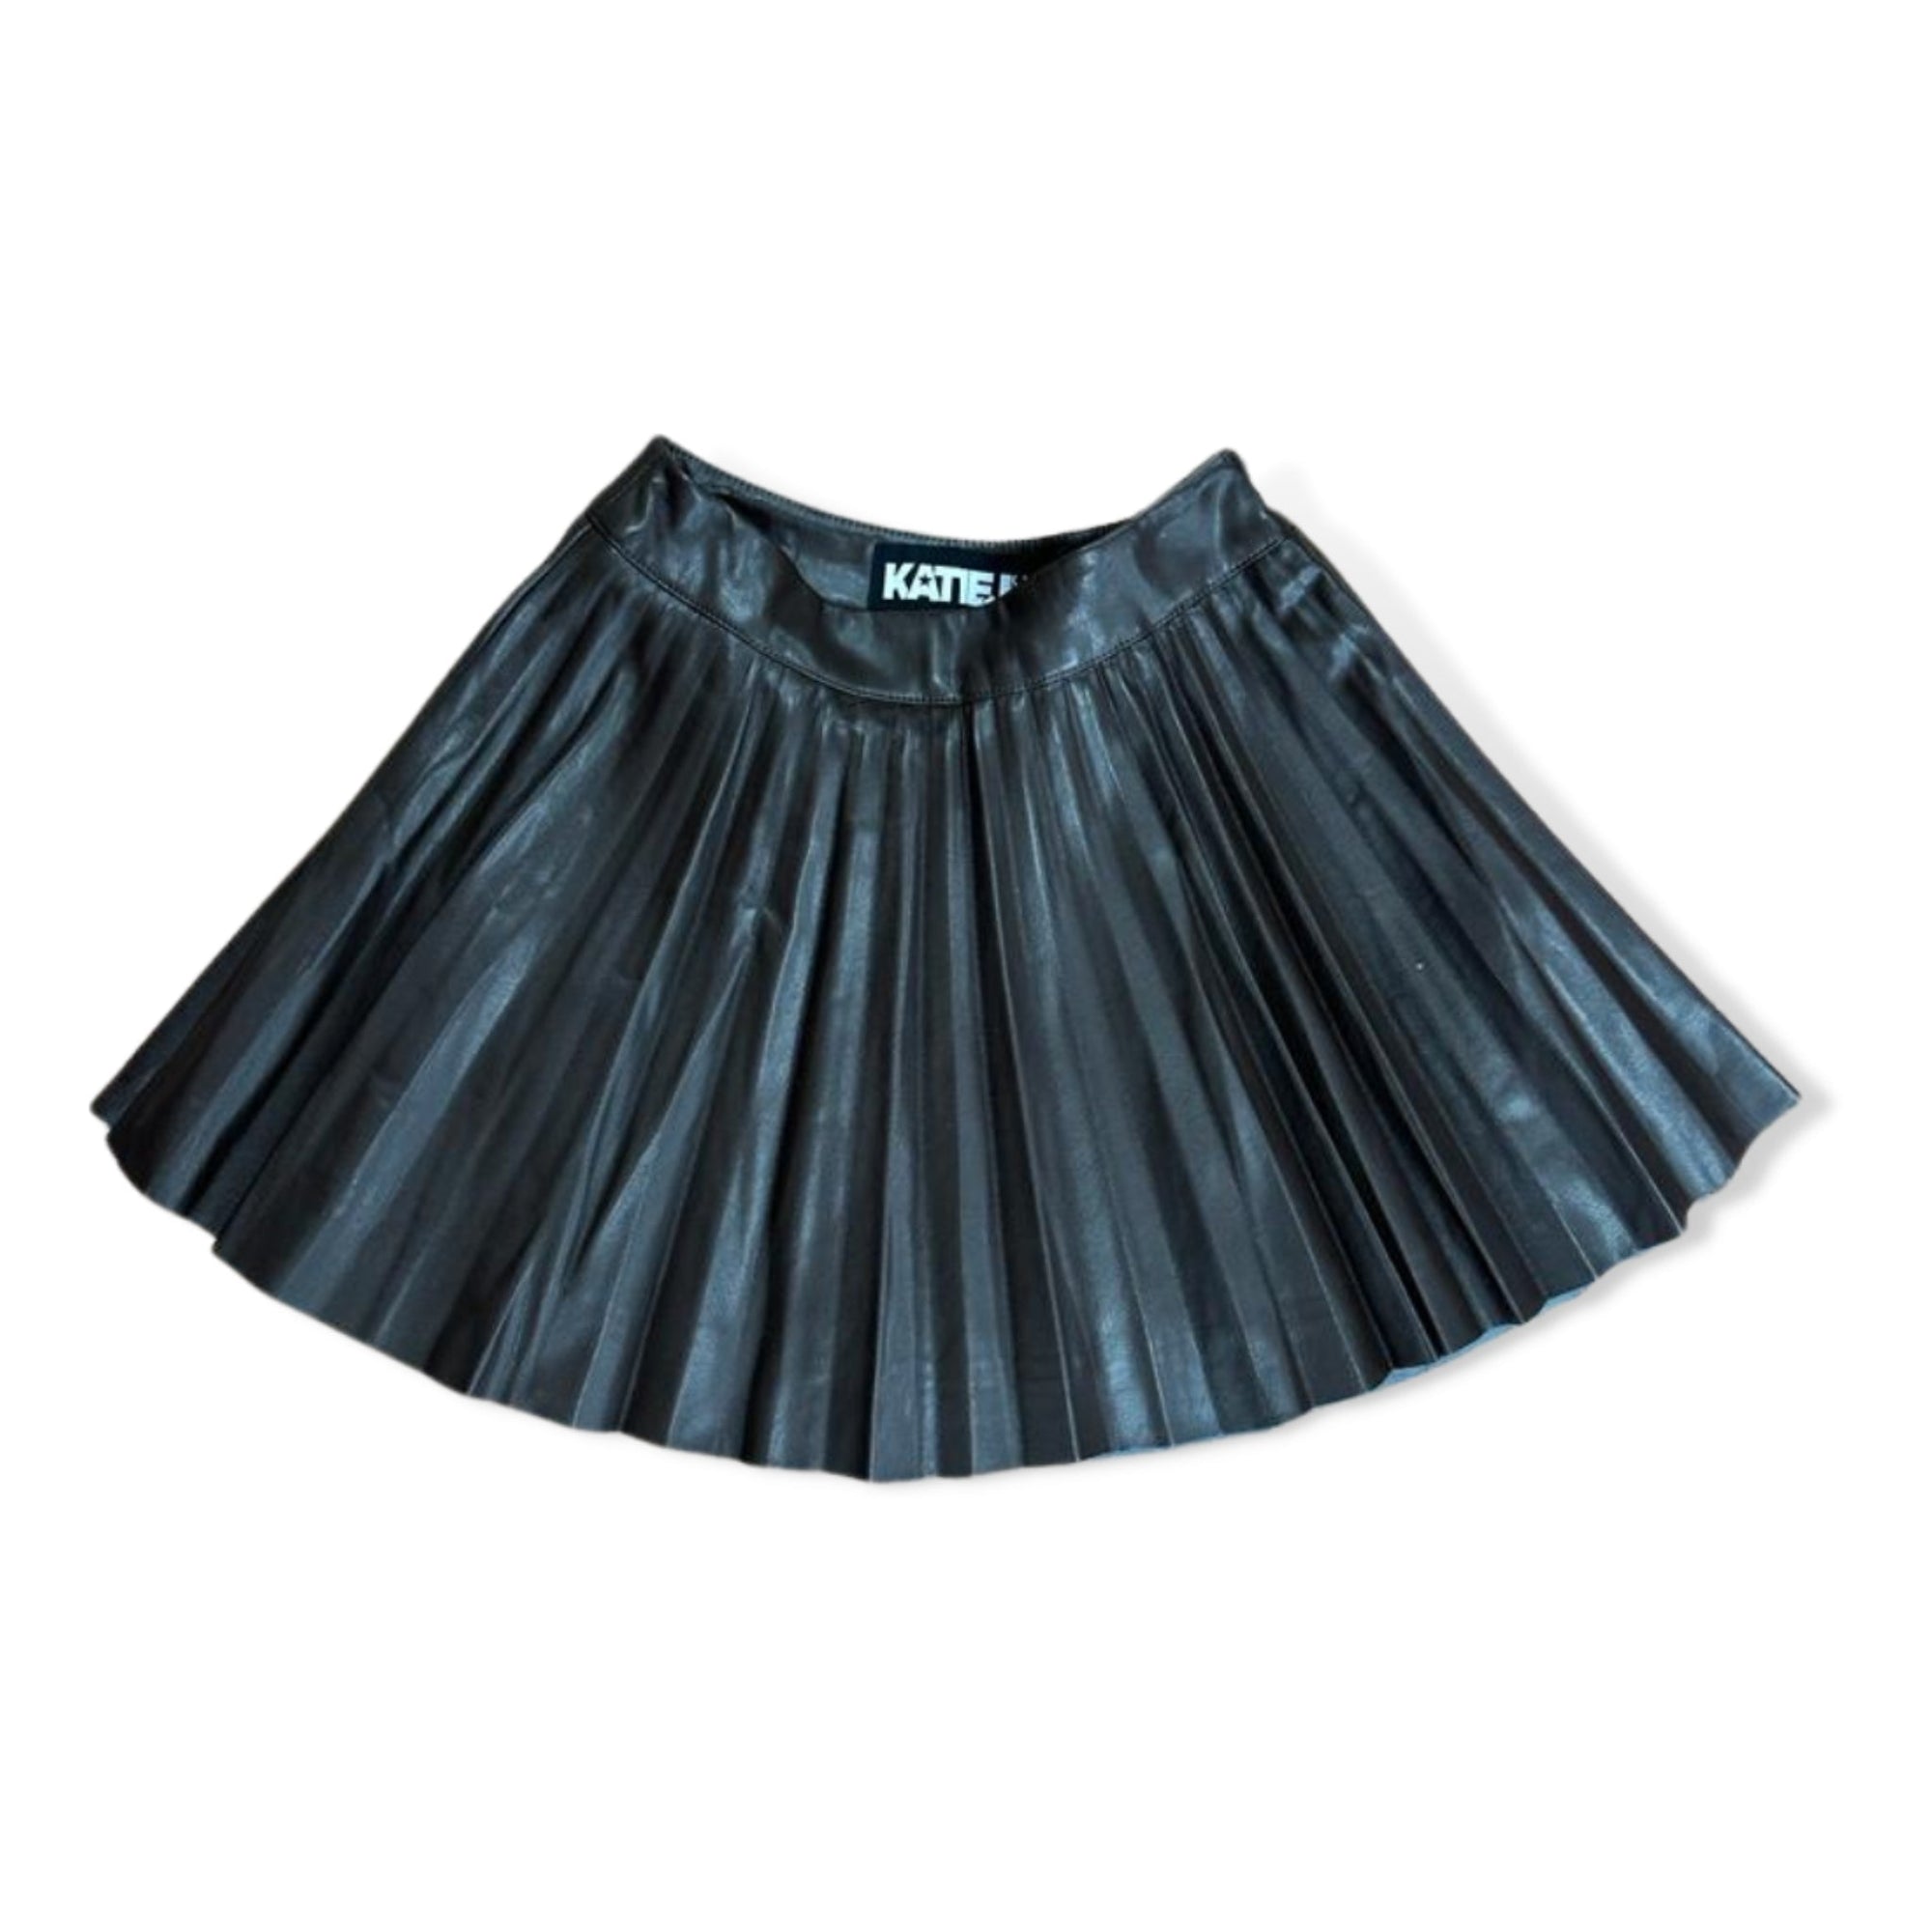 KatieJNYC Chocolate Vegan Leather Charlie Skirt - a Spirit Animal - Skirt $60-$90 active August 2023 bottoms